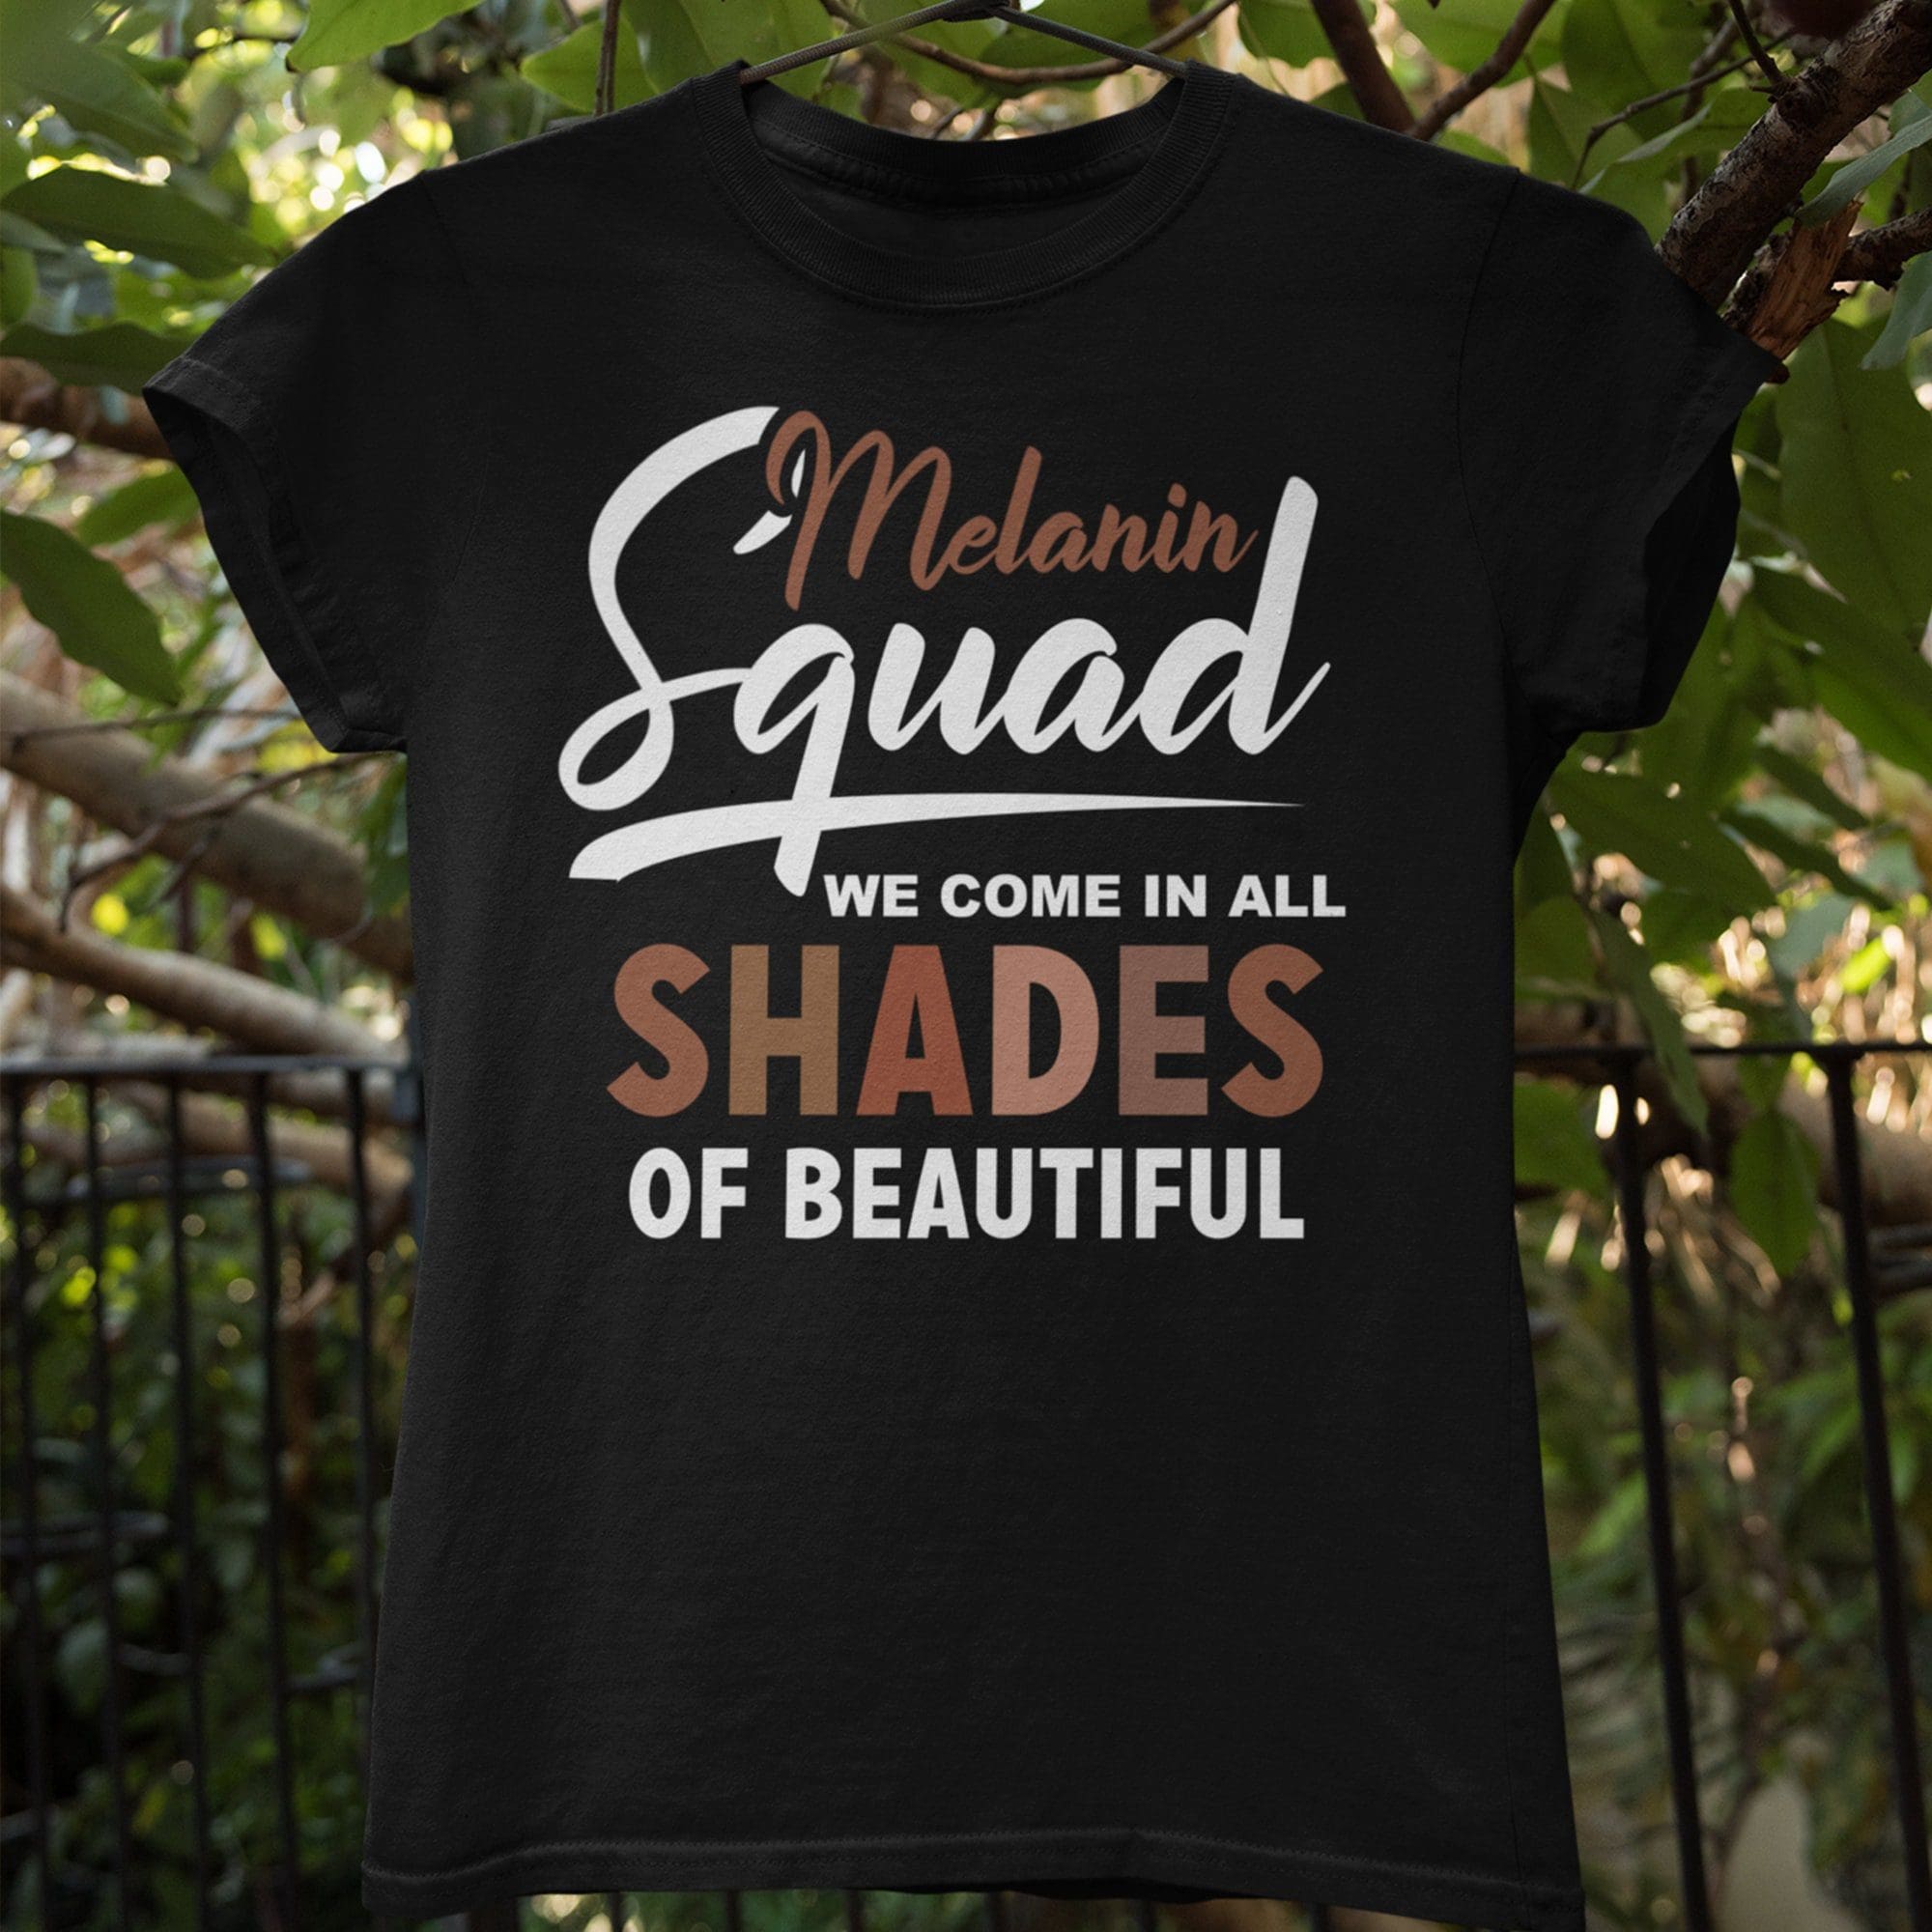 Melanin Squad Shirt, wakuda, black-owned clothing brands, uk black brands, black pound day